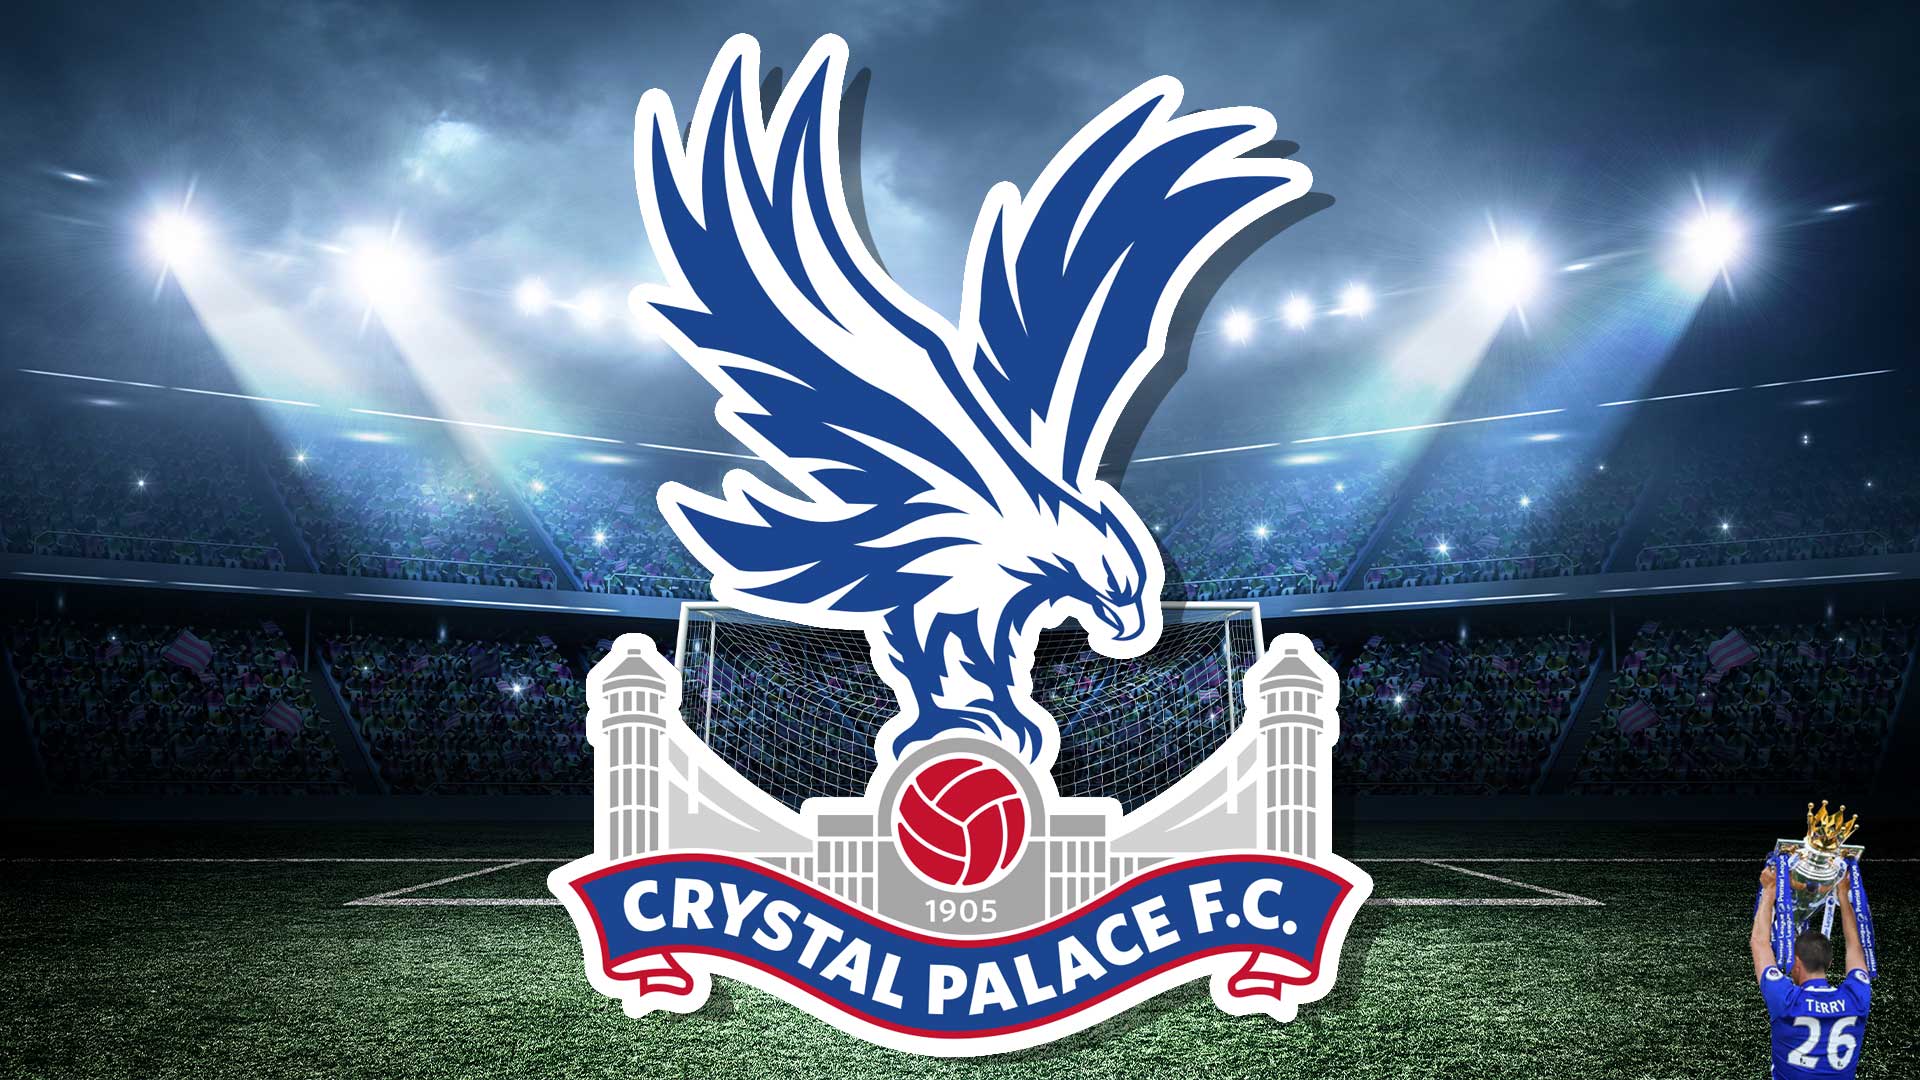 Crystal Palace badge and John Terry